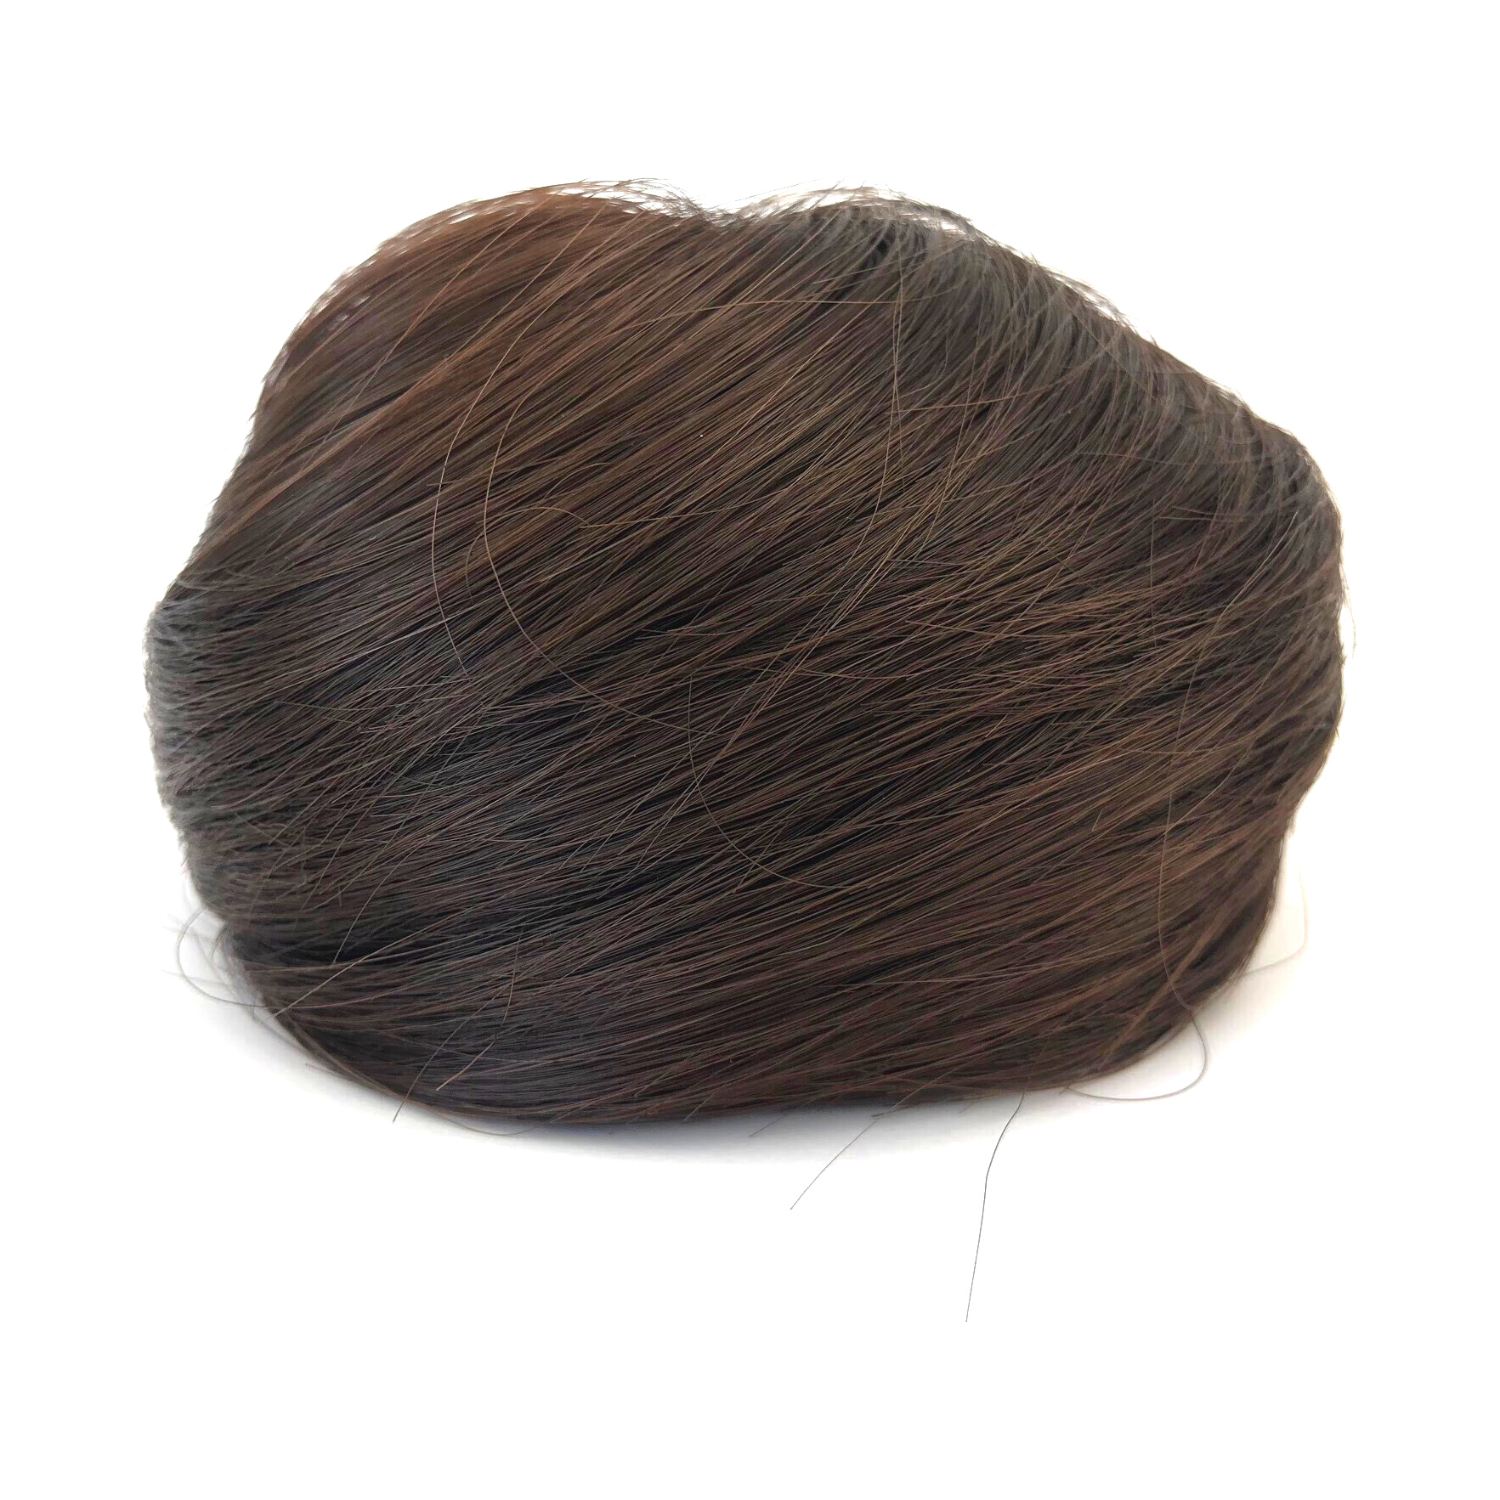 image of hair rehab london clip on bun hairpiece in shade chocolate